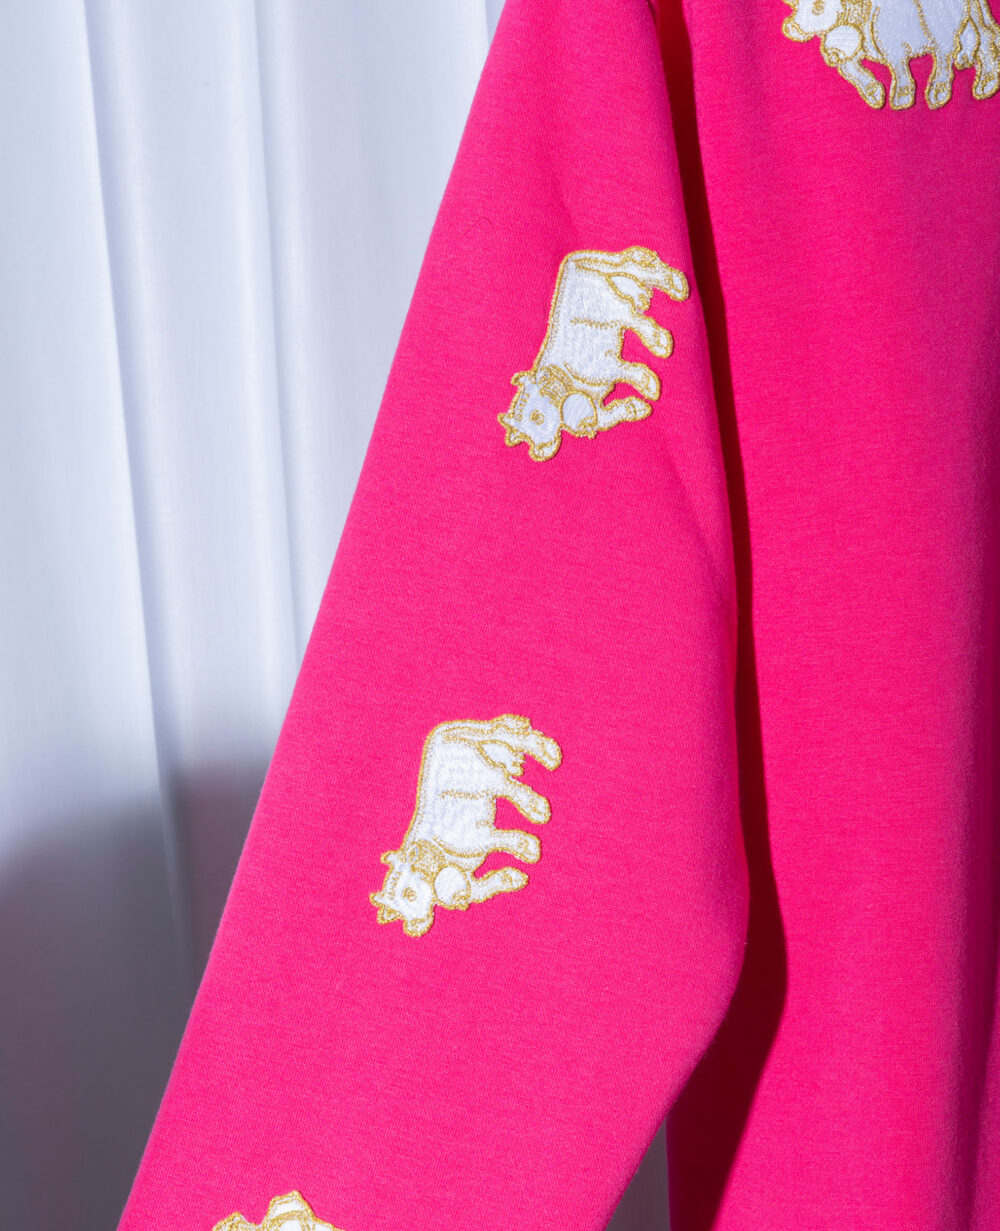 Details Appenzeller Sweater pink | Collab with Julian Zigerli